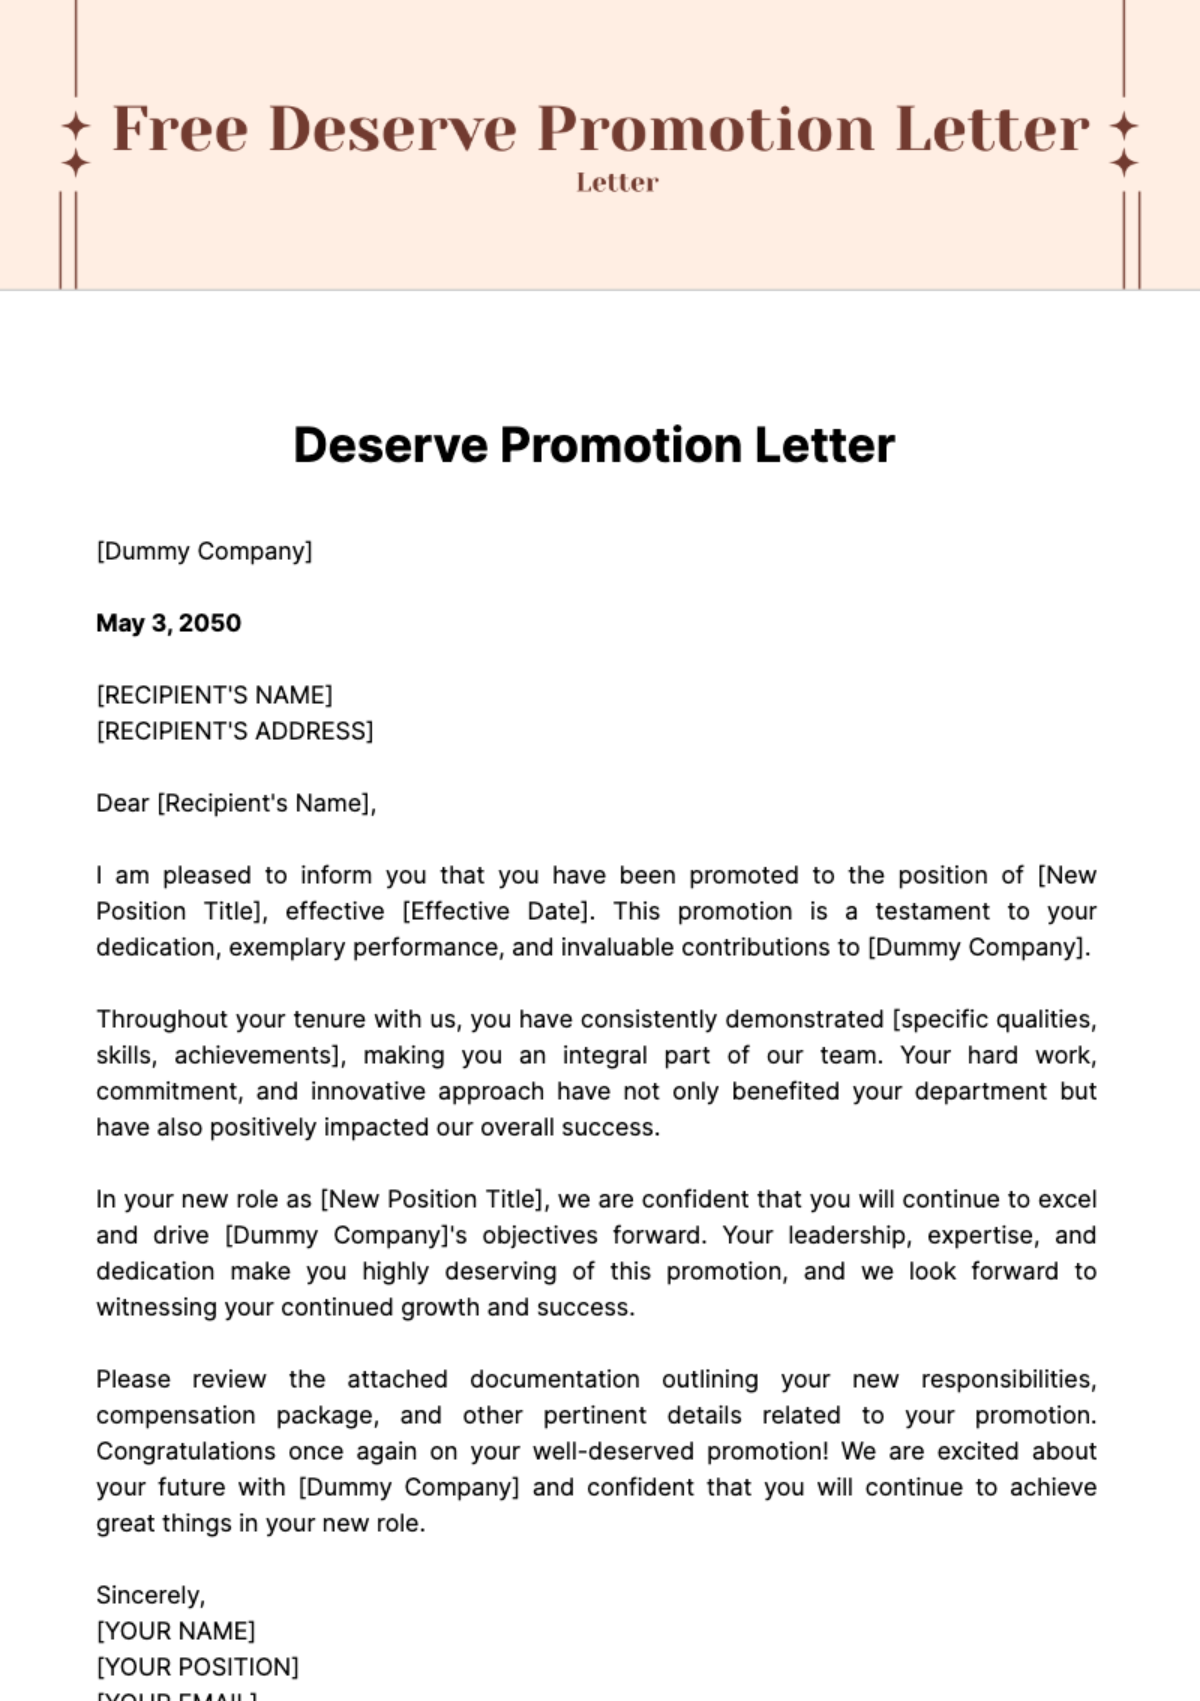 Deserve Promotion Letter Template